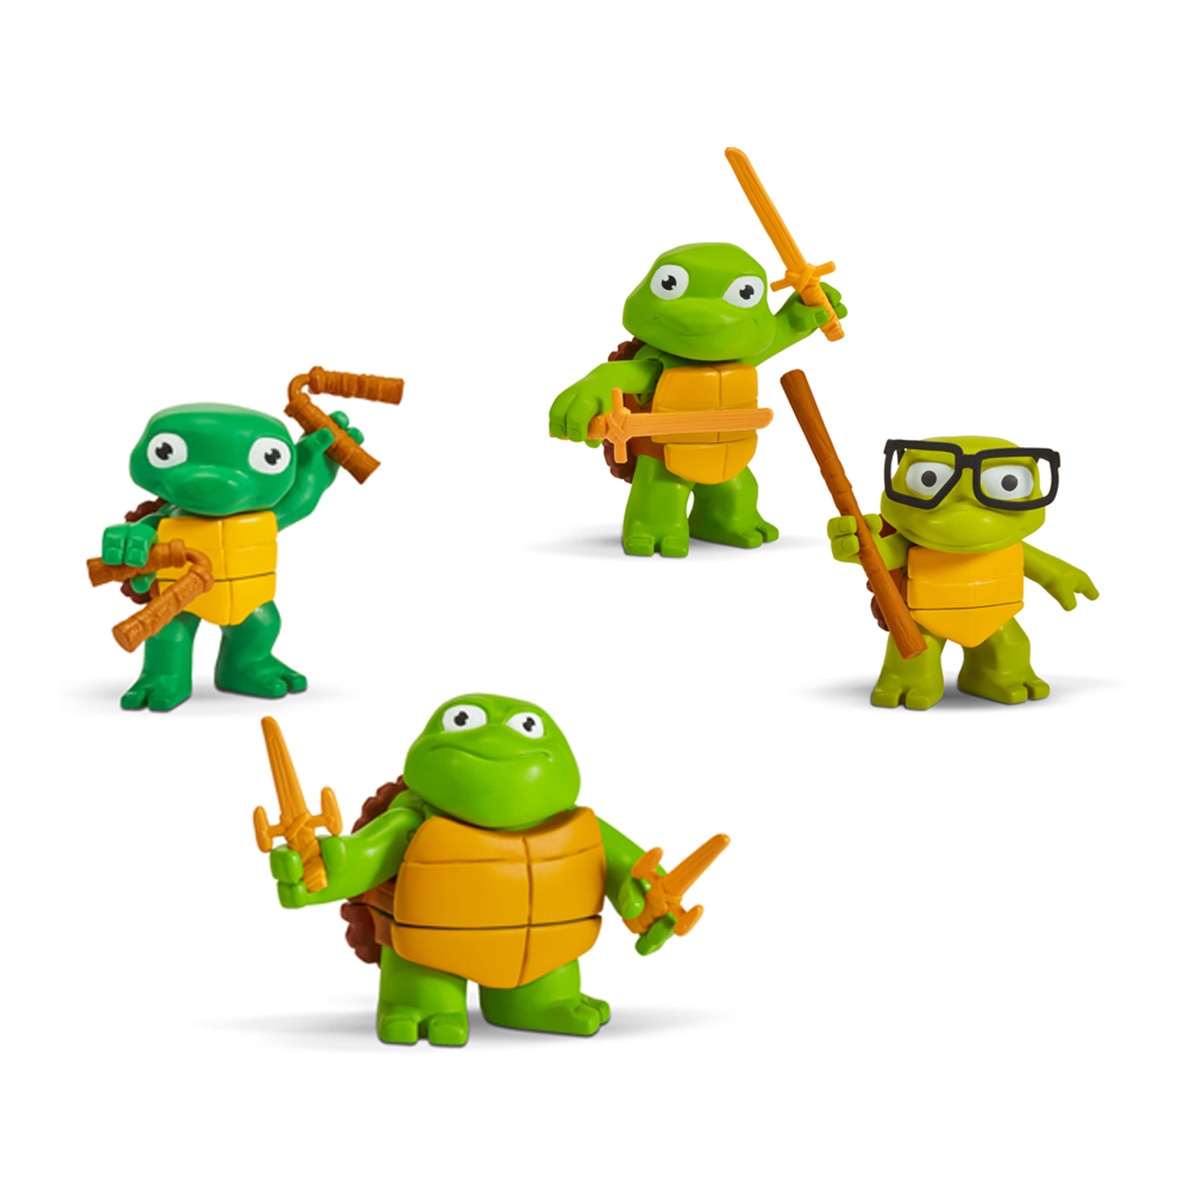 Famosa - Pack Figuras Básicas Toddler Tortugas Ninja Famosa.